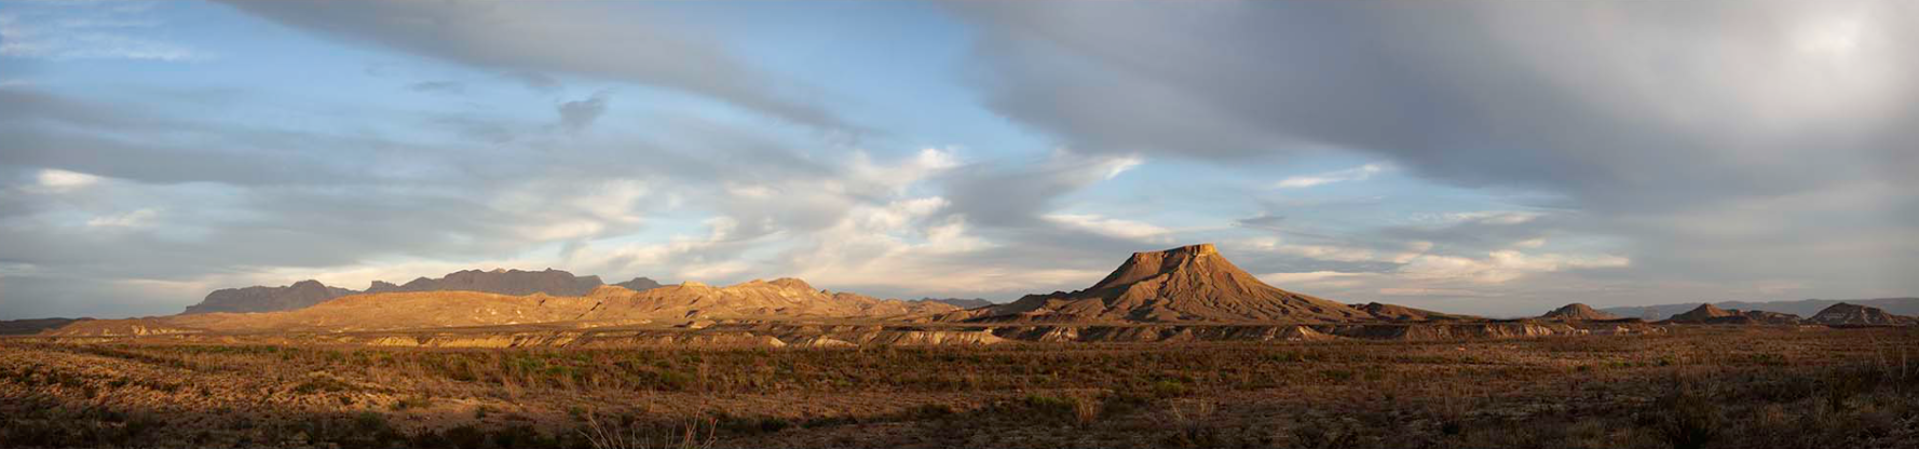 Tule Panoramic by James H. Evans